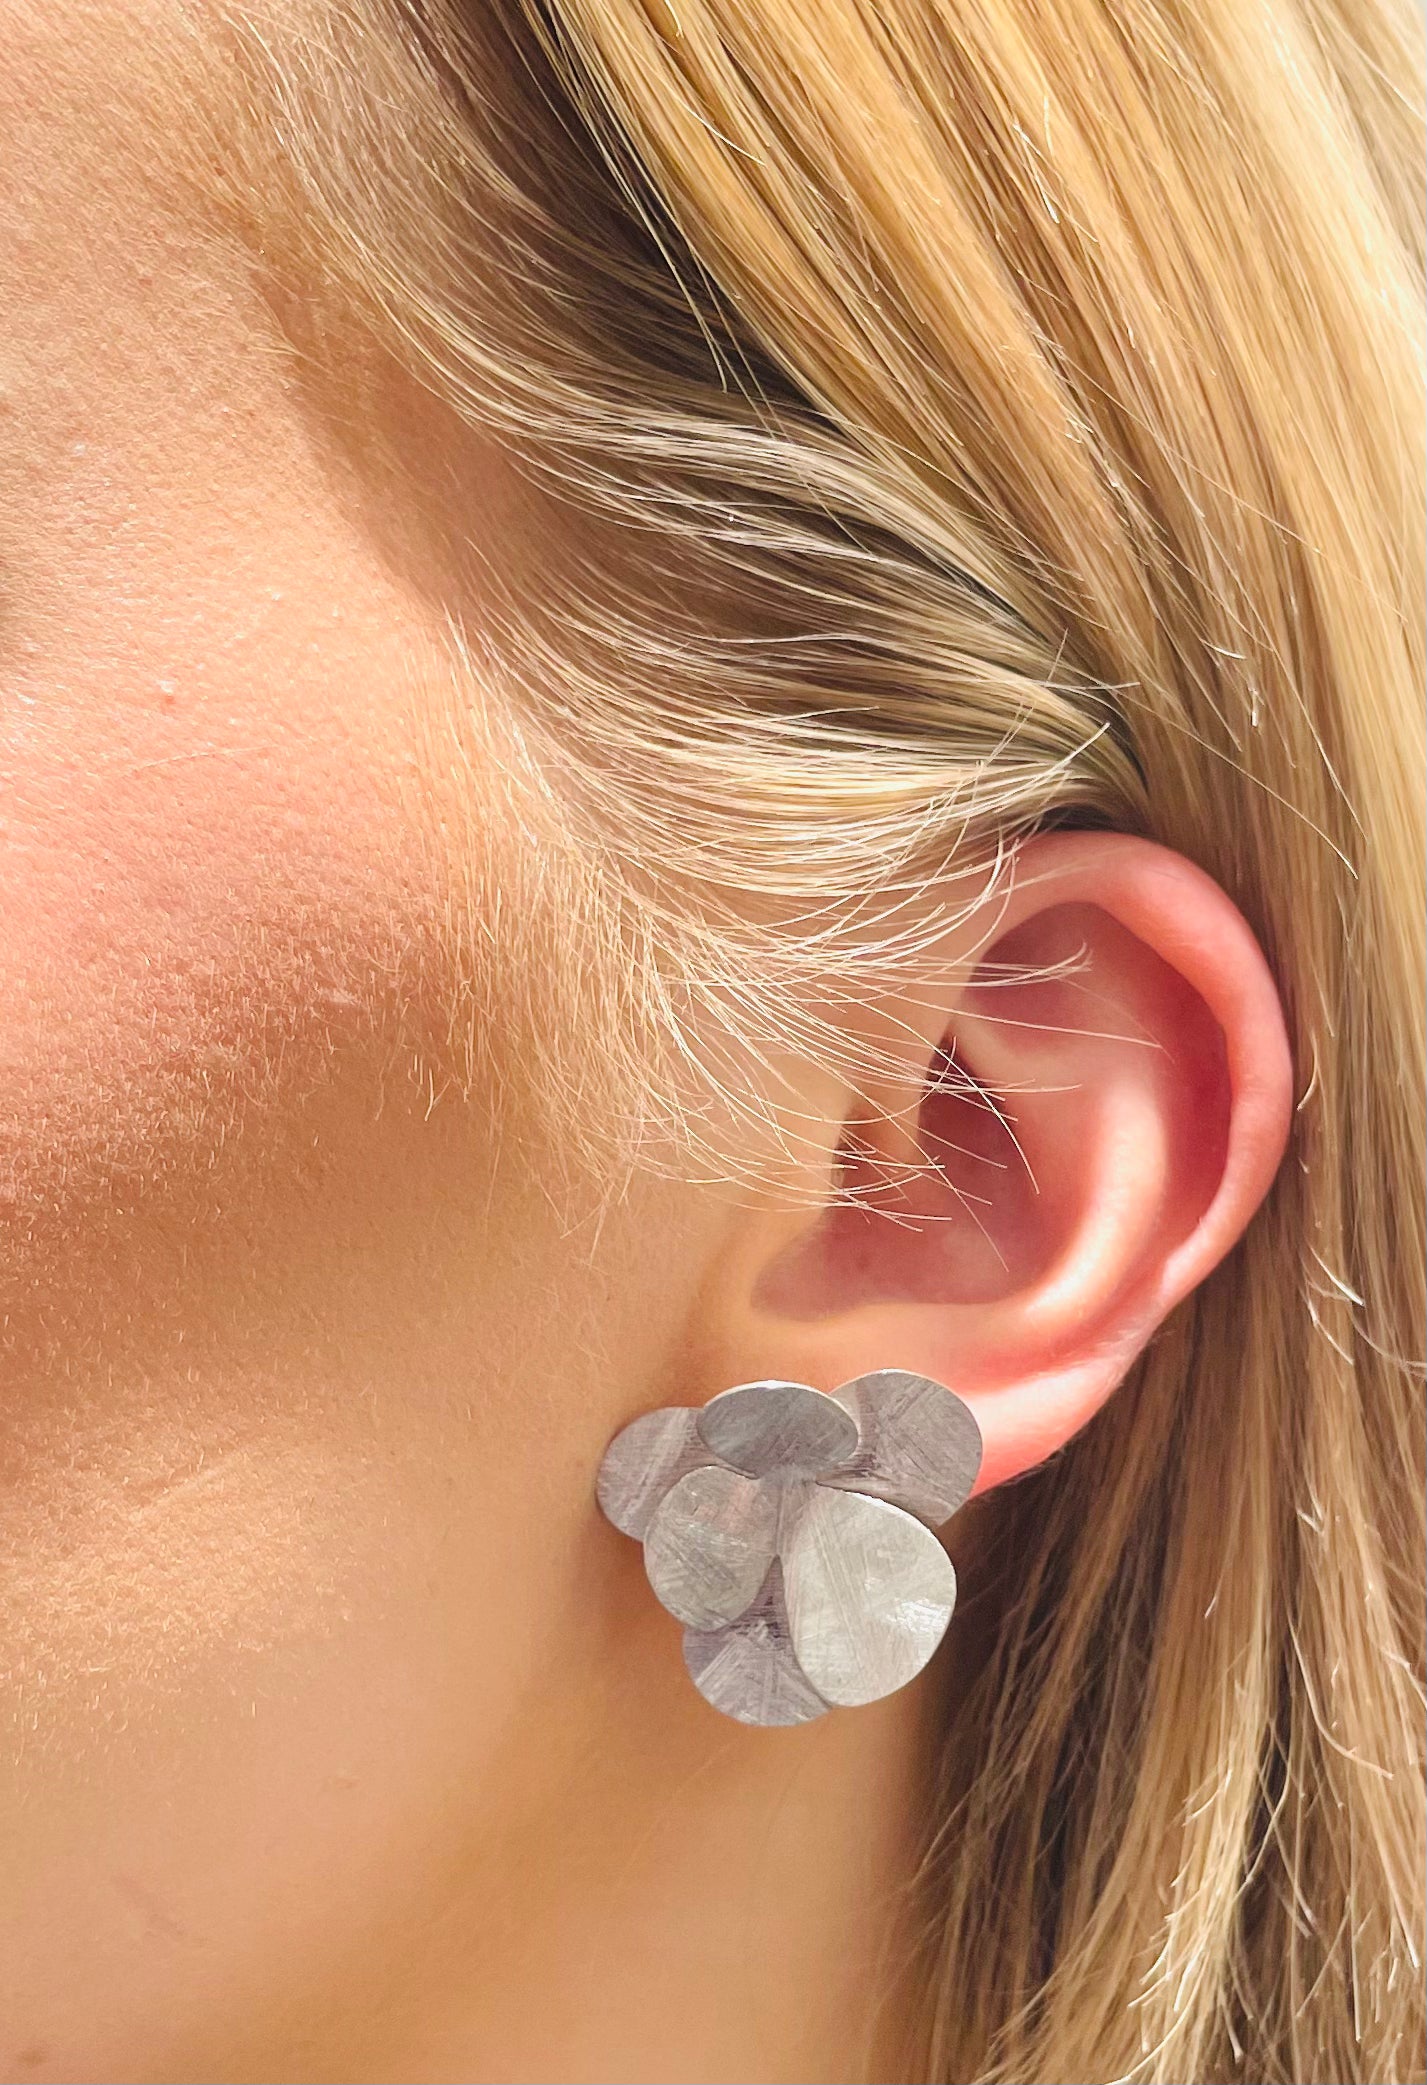 Flower earring